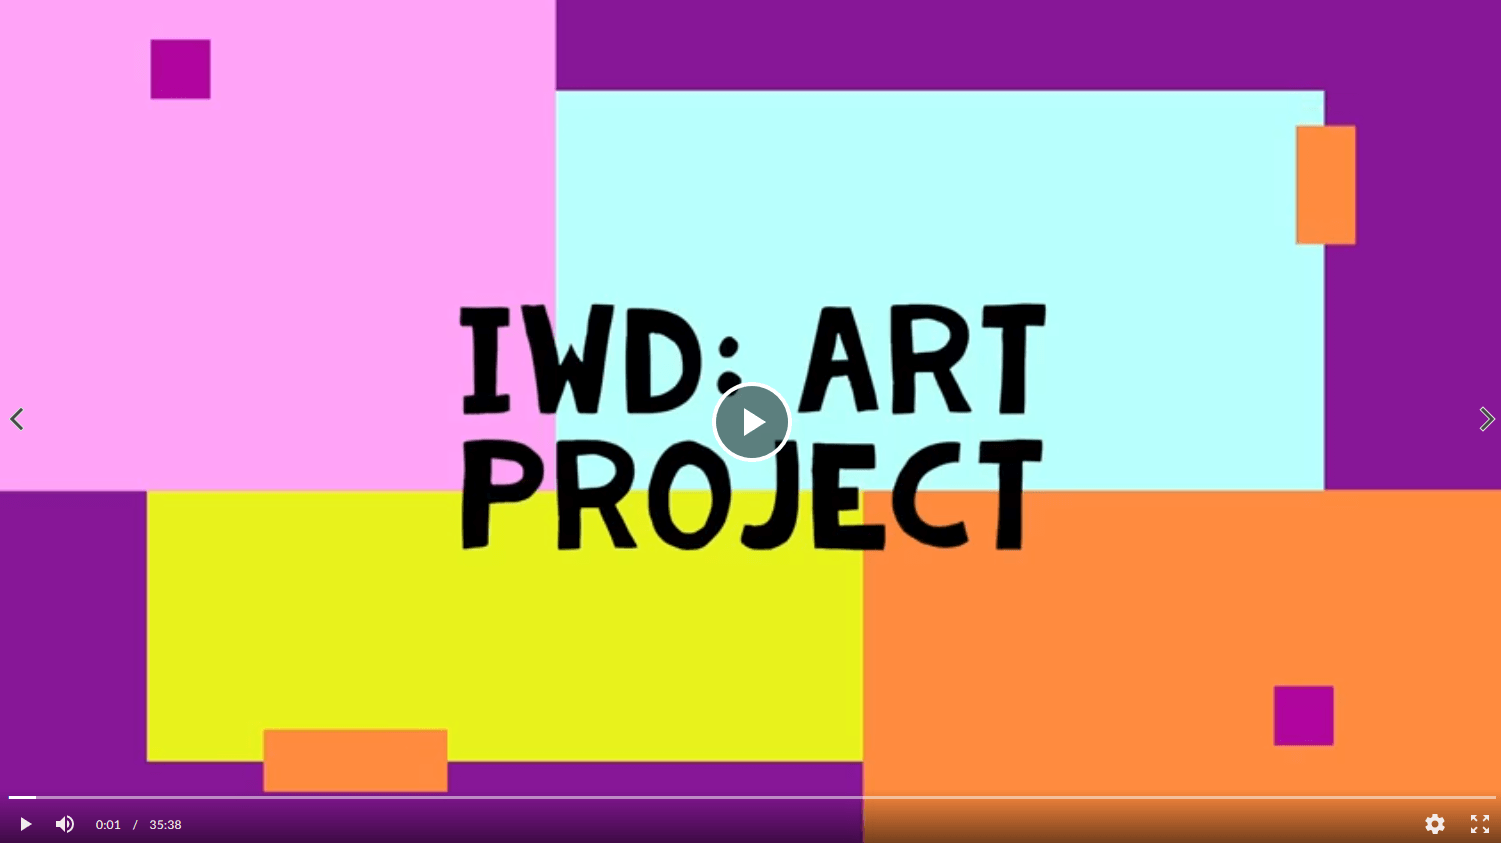 IWD: Art Project